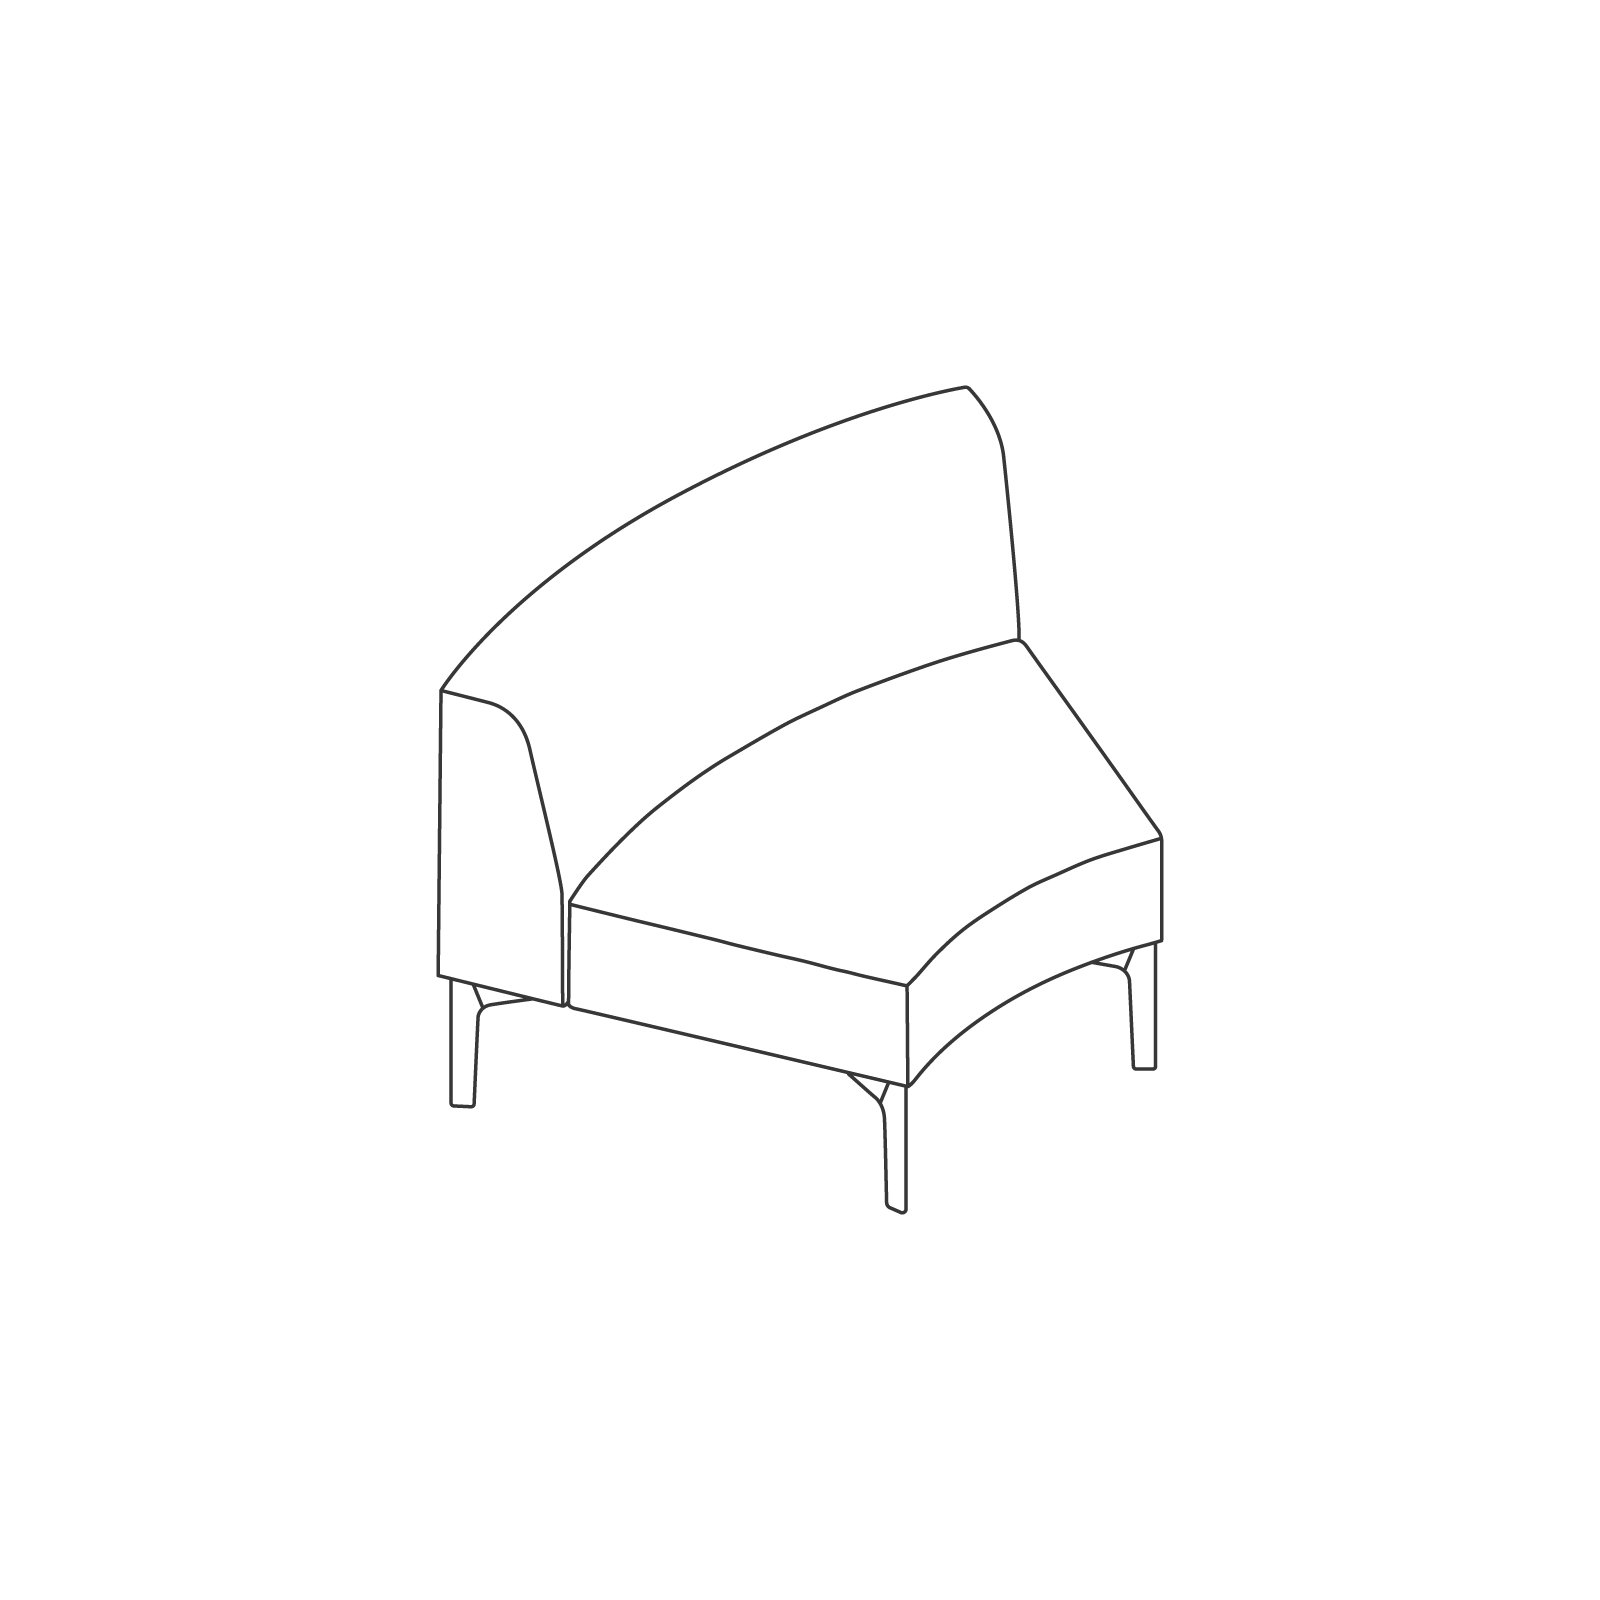 A line drawing - Symbol Modular Seating–45-Degree Curve